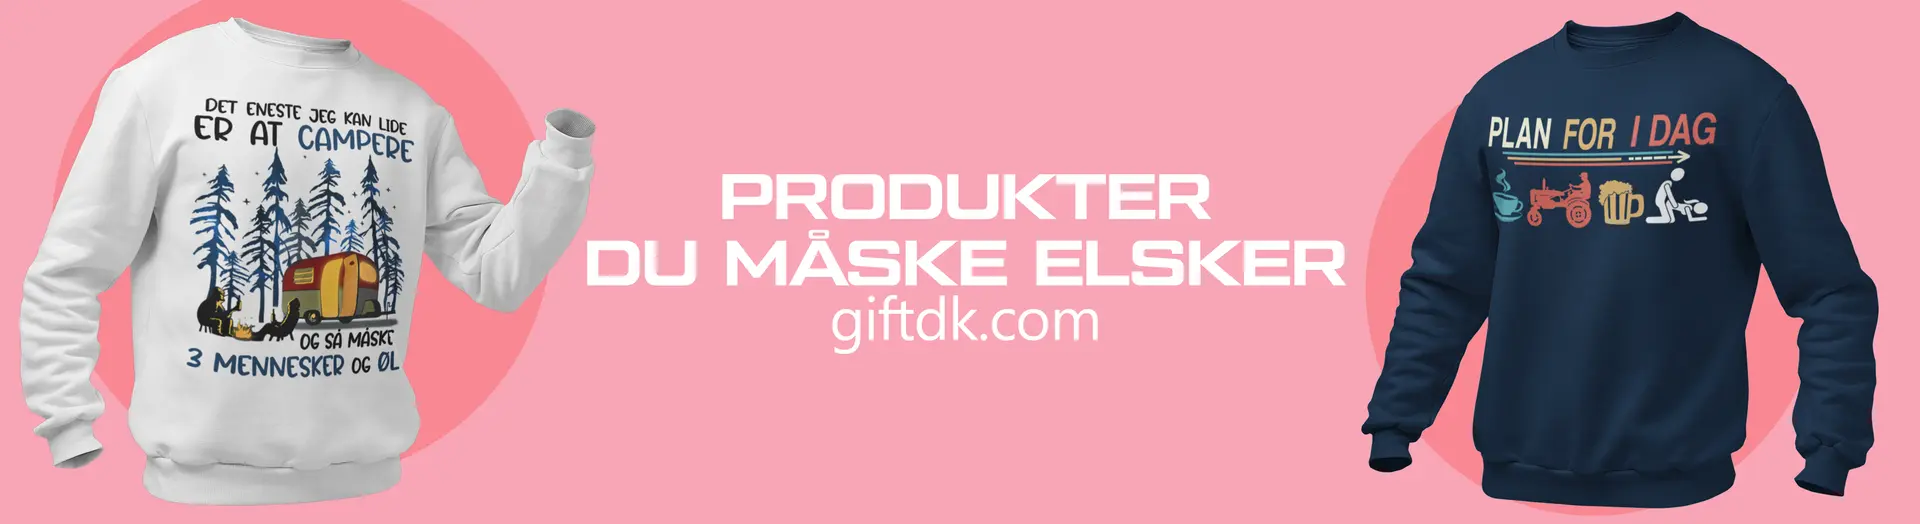 Banner for GiftDK